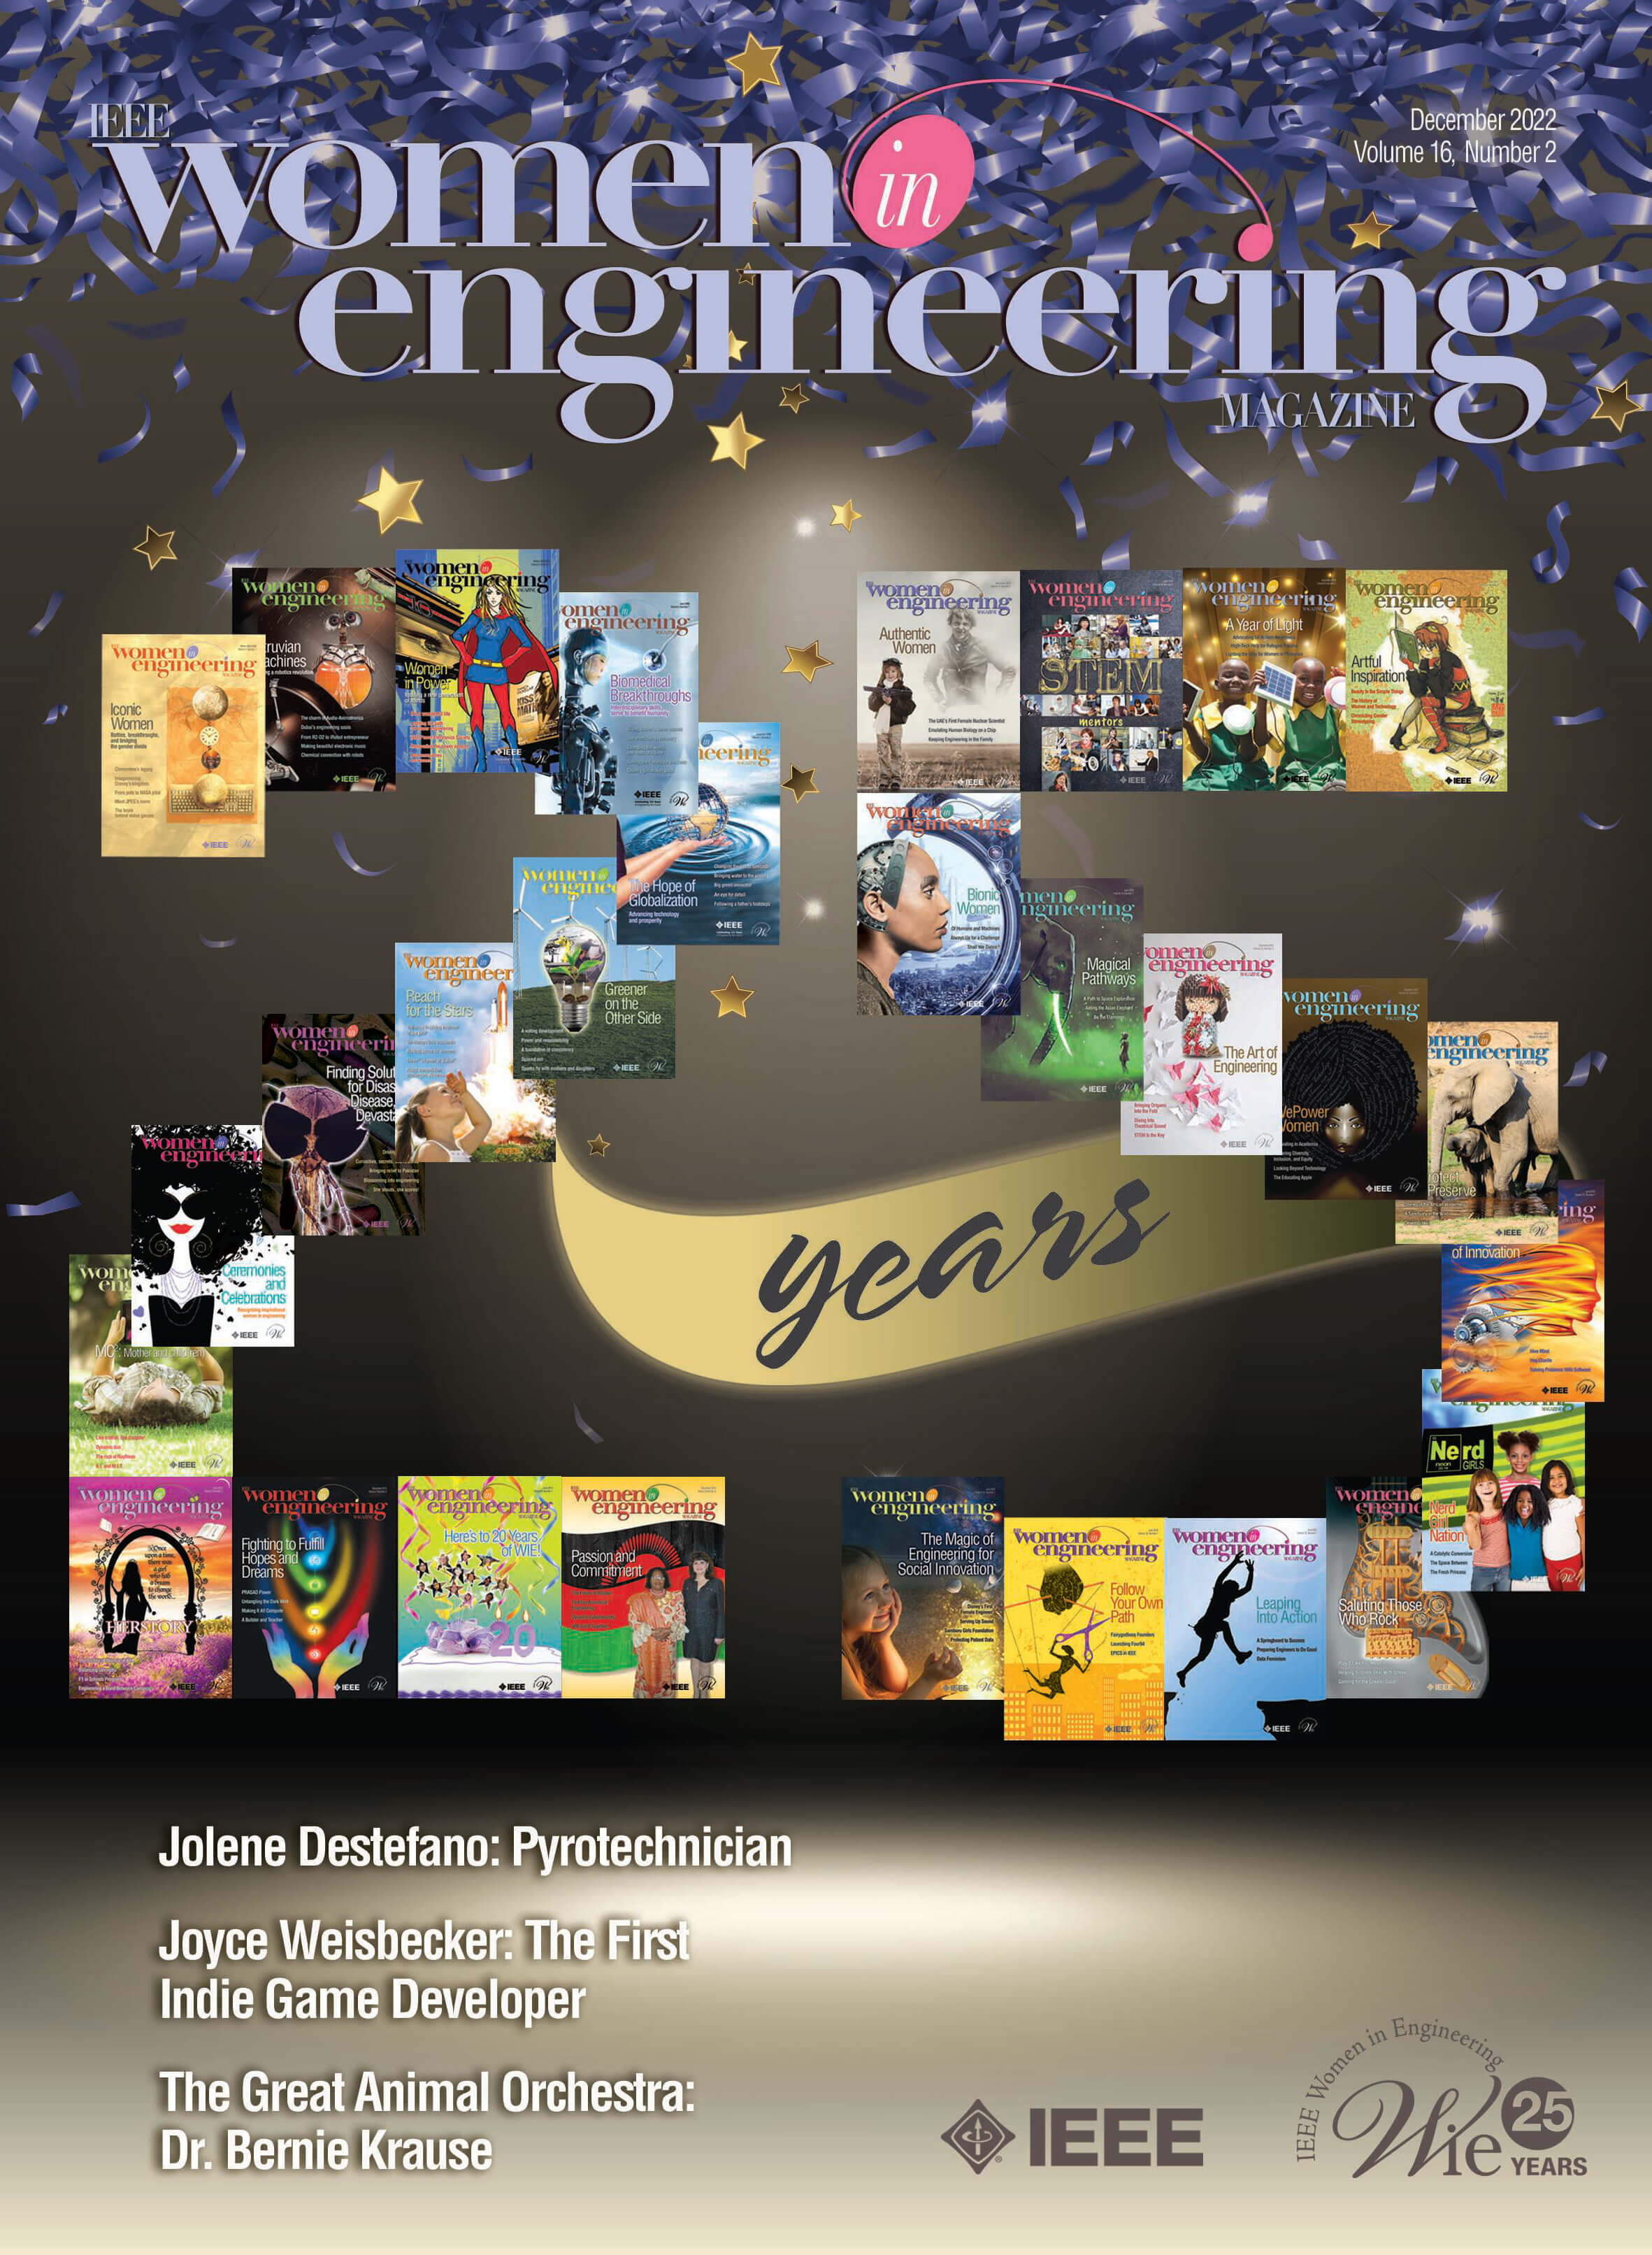 25th anniversary issue of Women in Engineering magazine